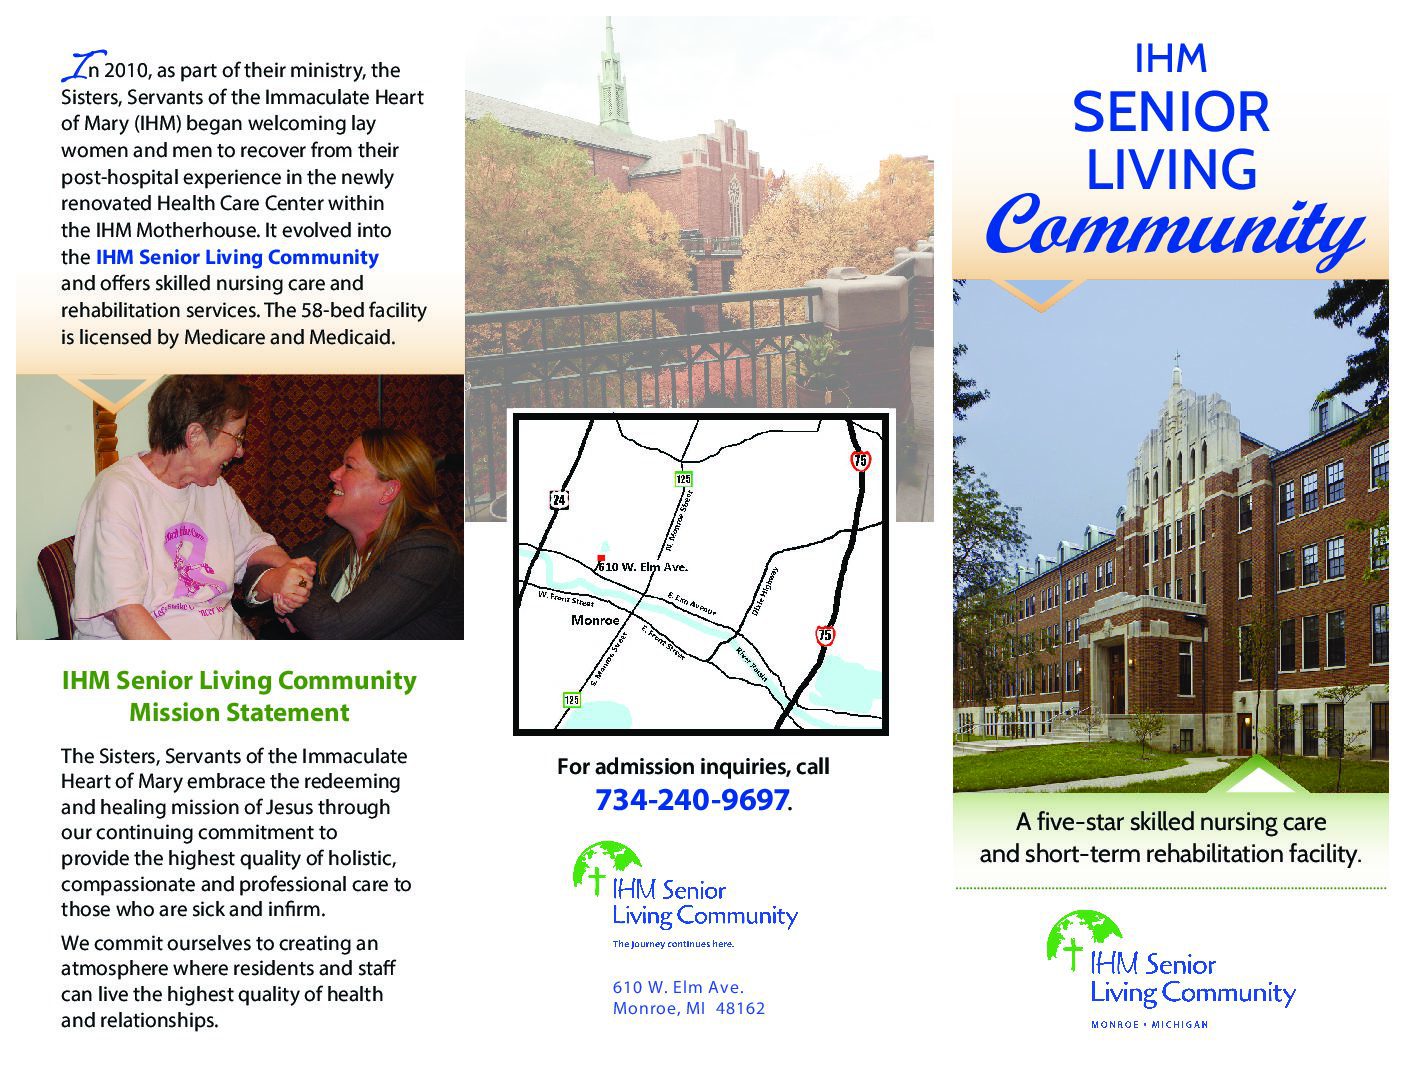 IHM_REVISED–SeniorLivingCommunity_new logo and text Feature Image